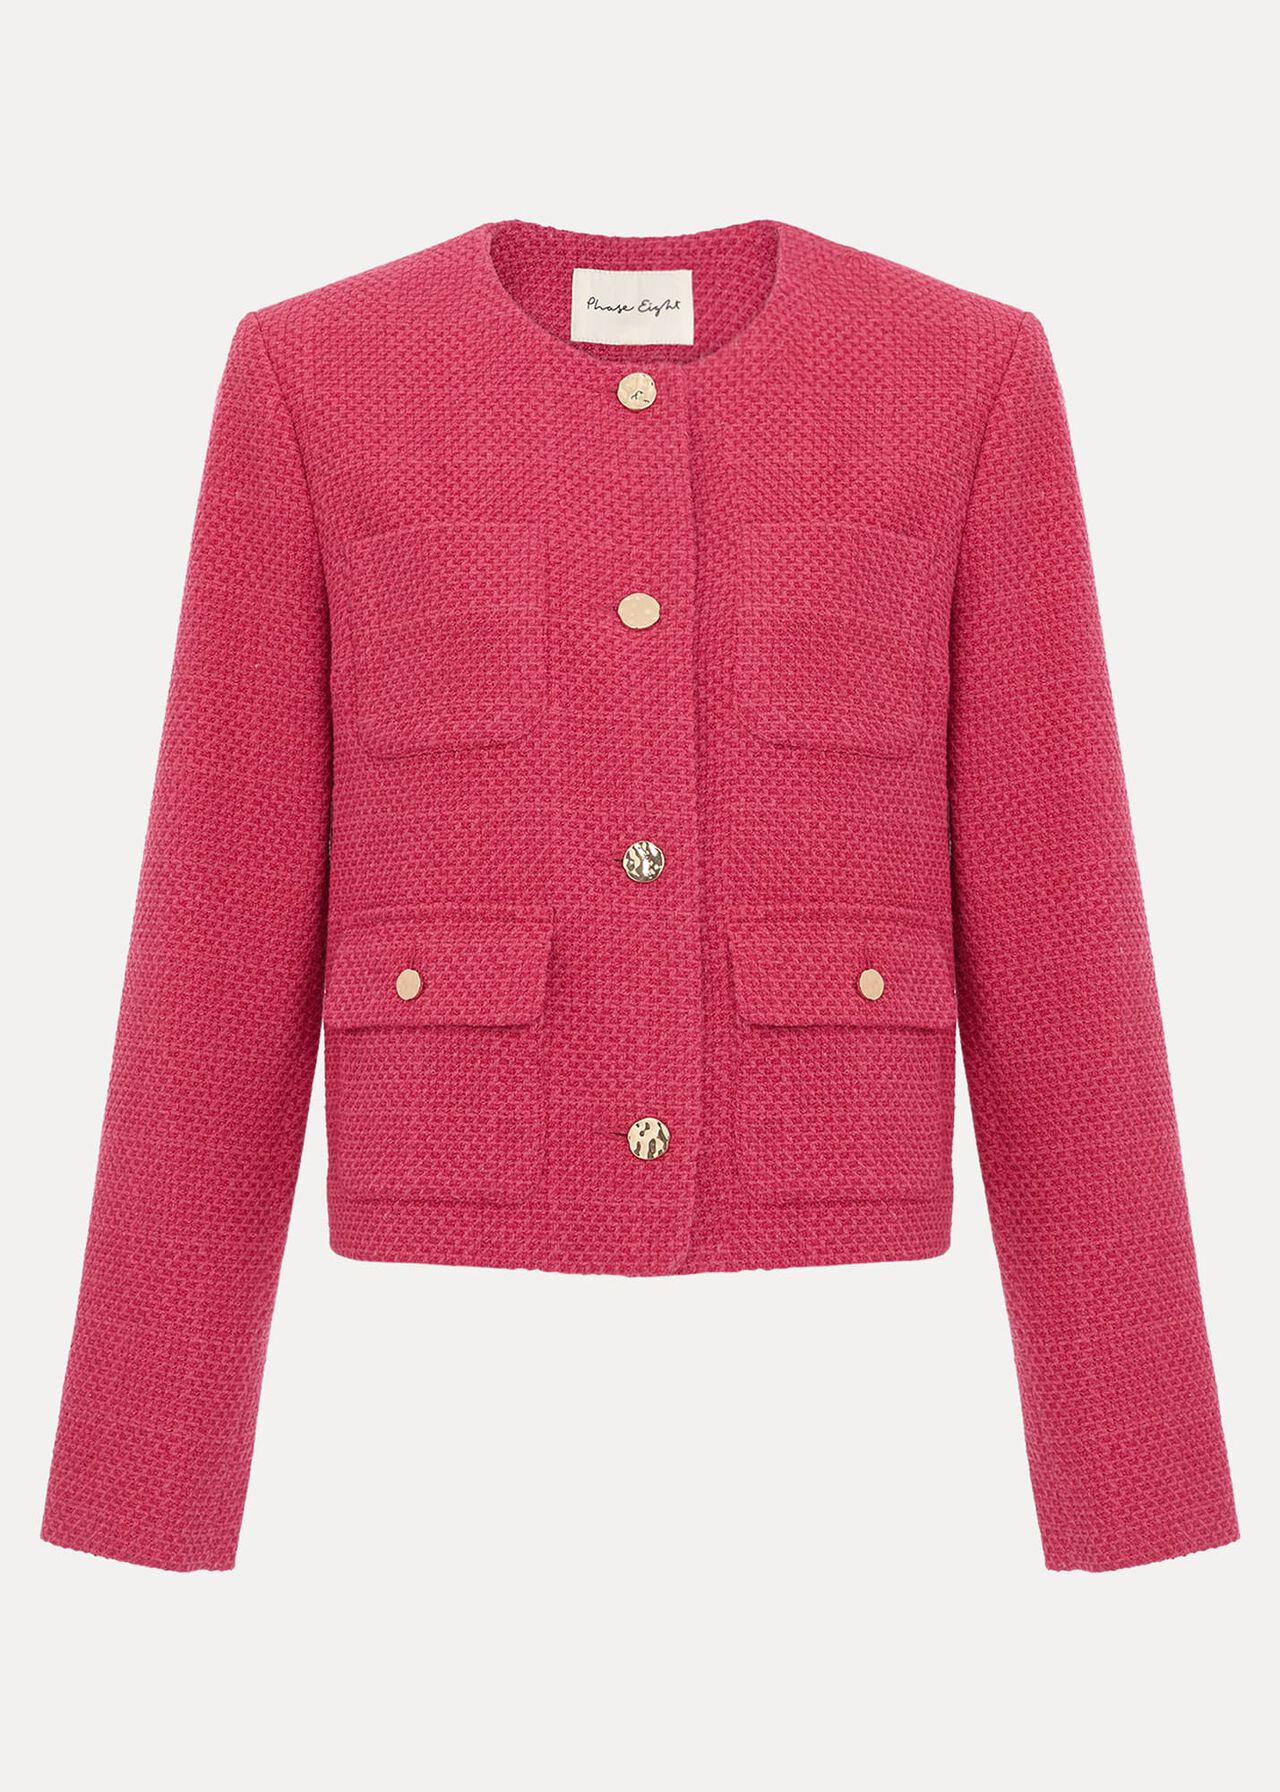 Ripley Pink Boucle Jacket